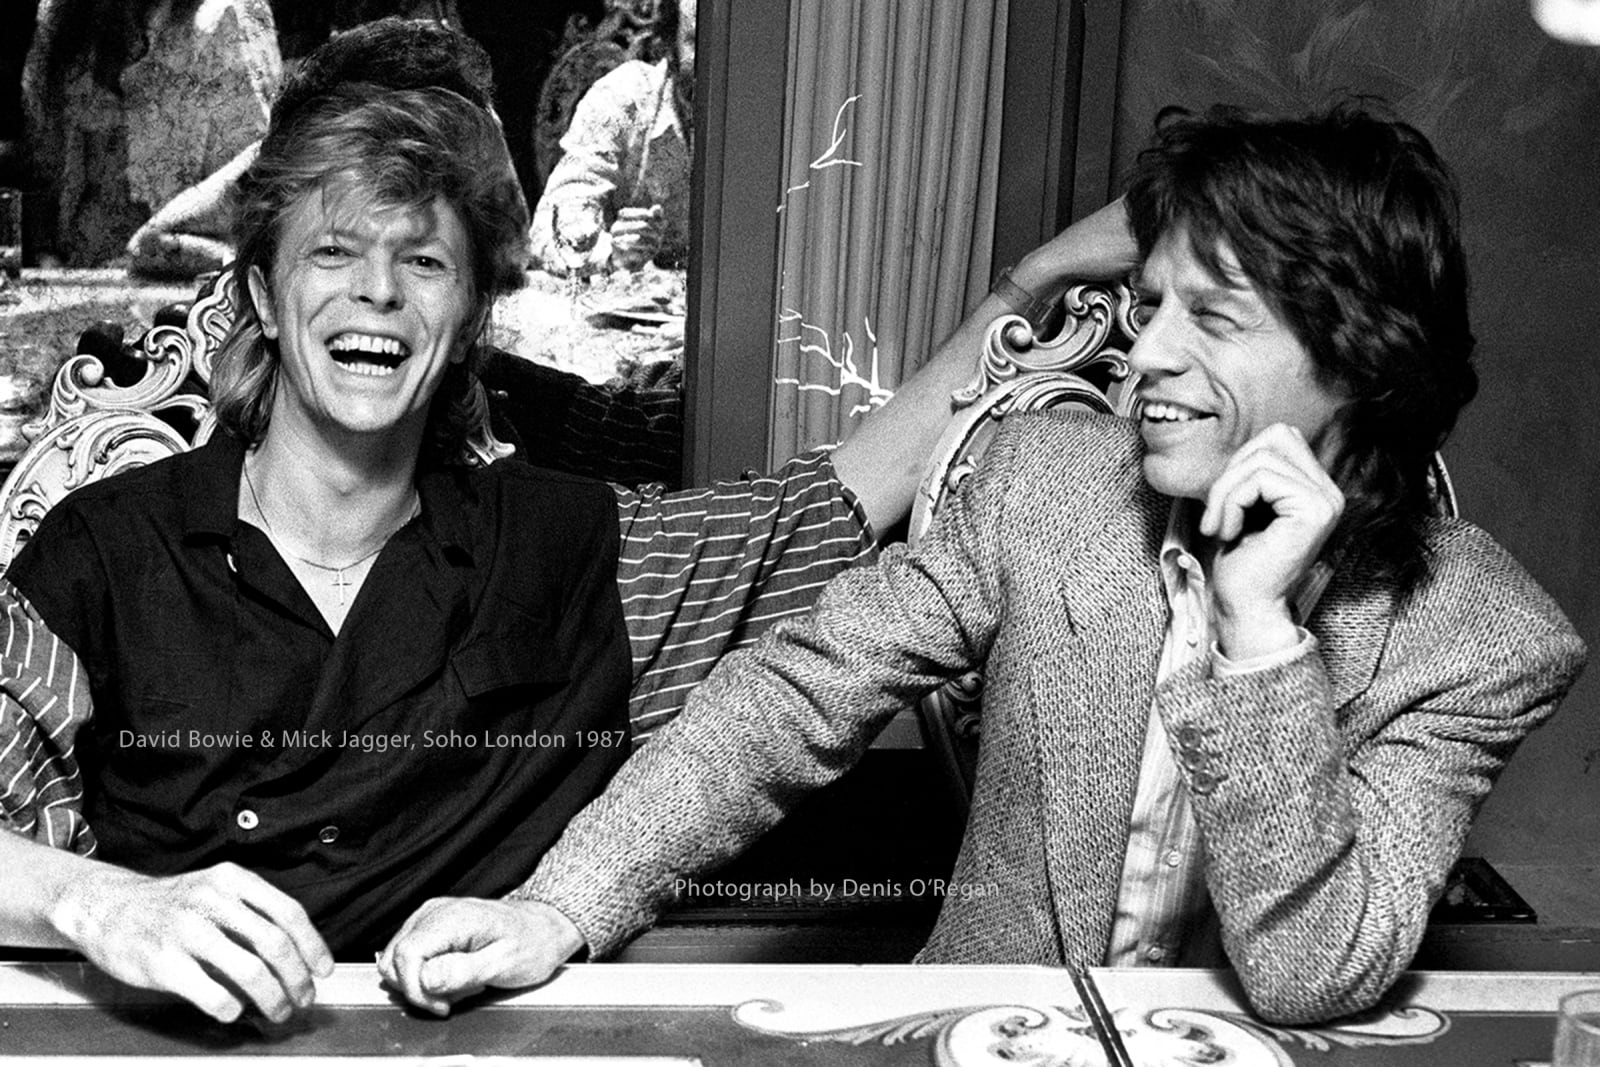 DAVID BOWIE, David Bowie & Mick Jagger London, 1987